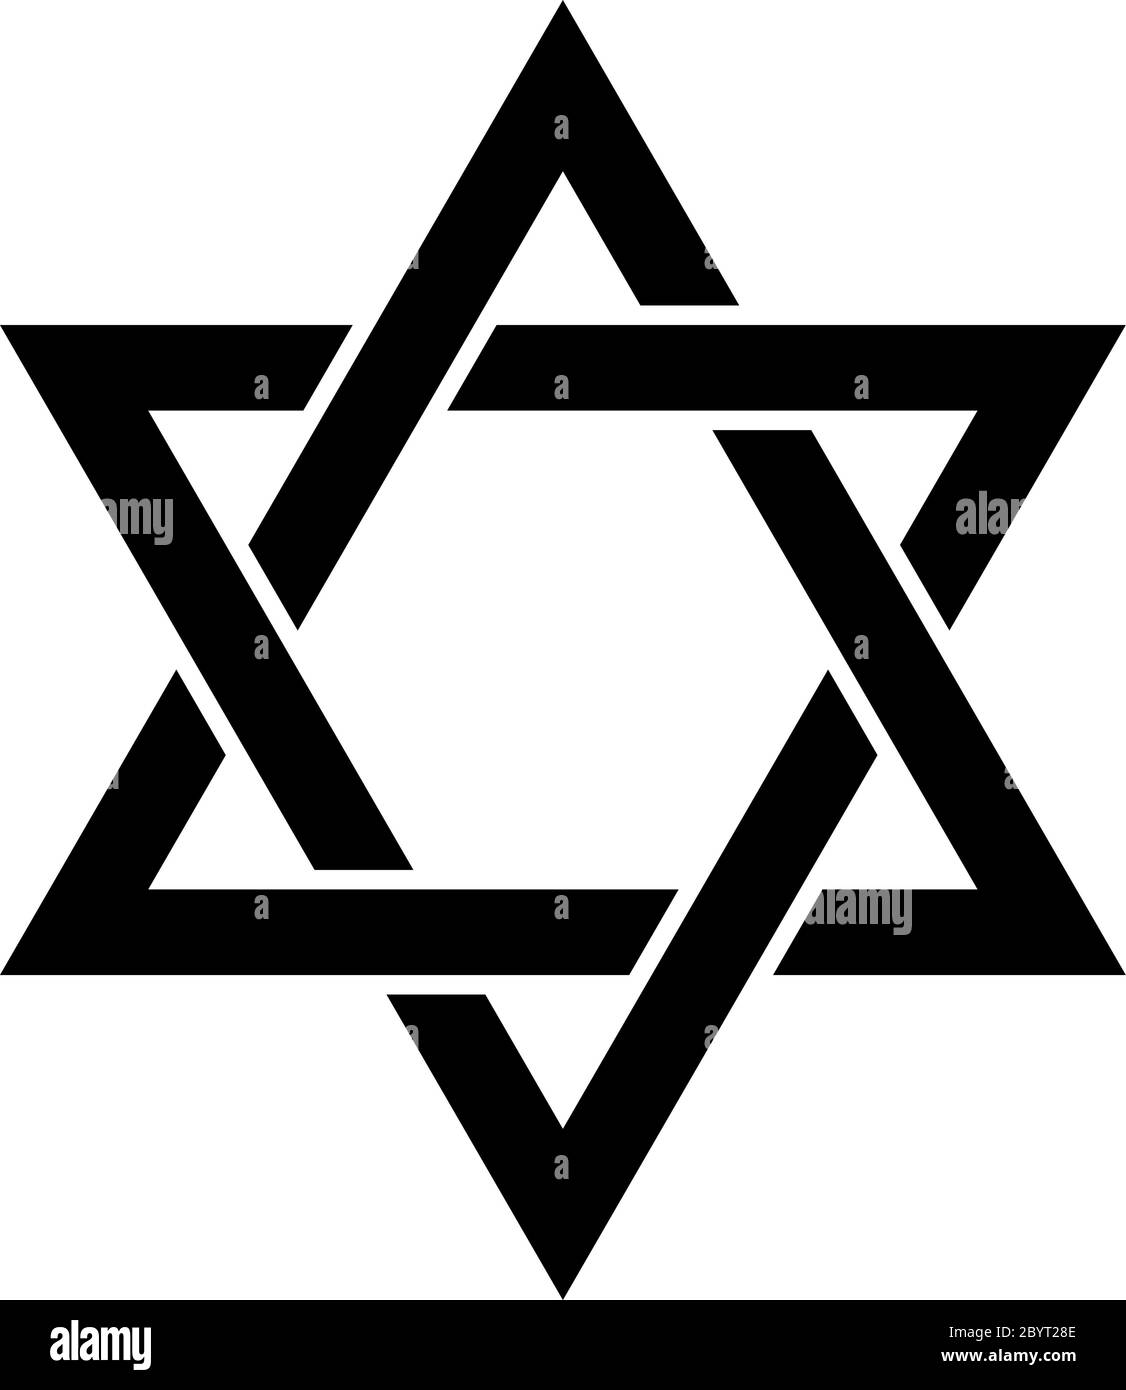 Star of David. Hexagram sign. Symbol of Jewish identity and Judaism. Simple flat black illustration. Stock Vector